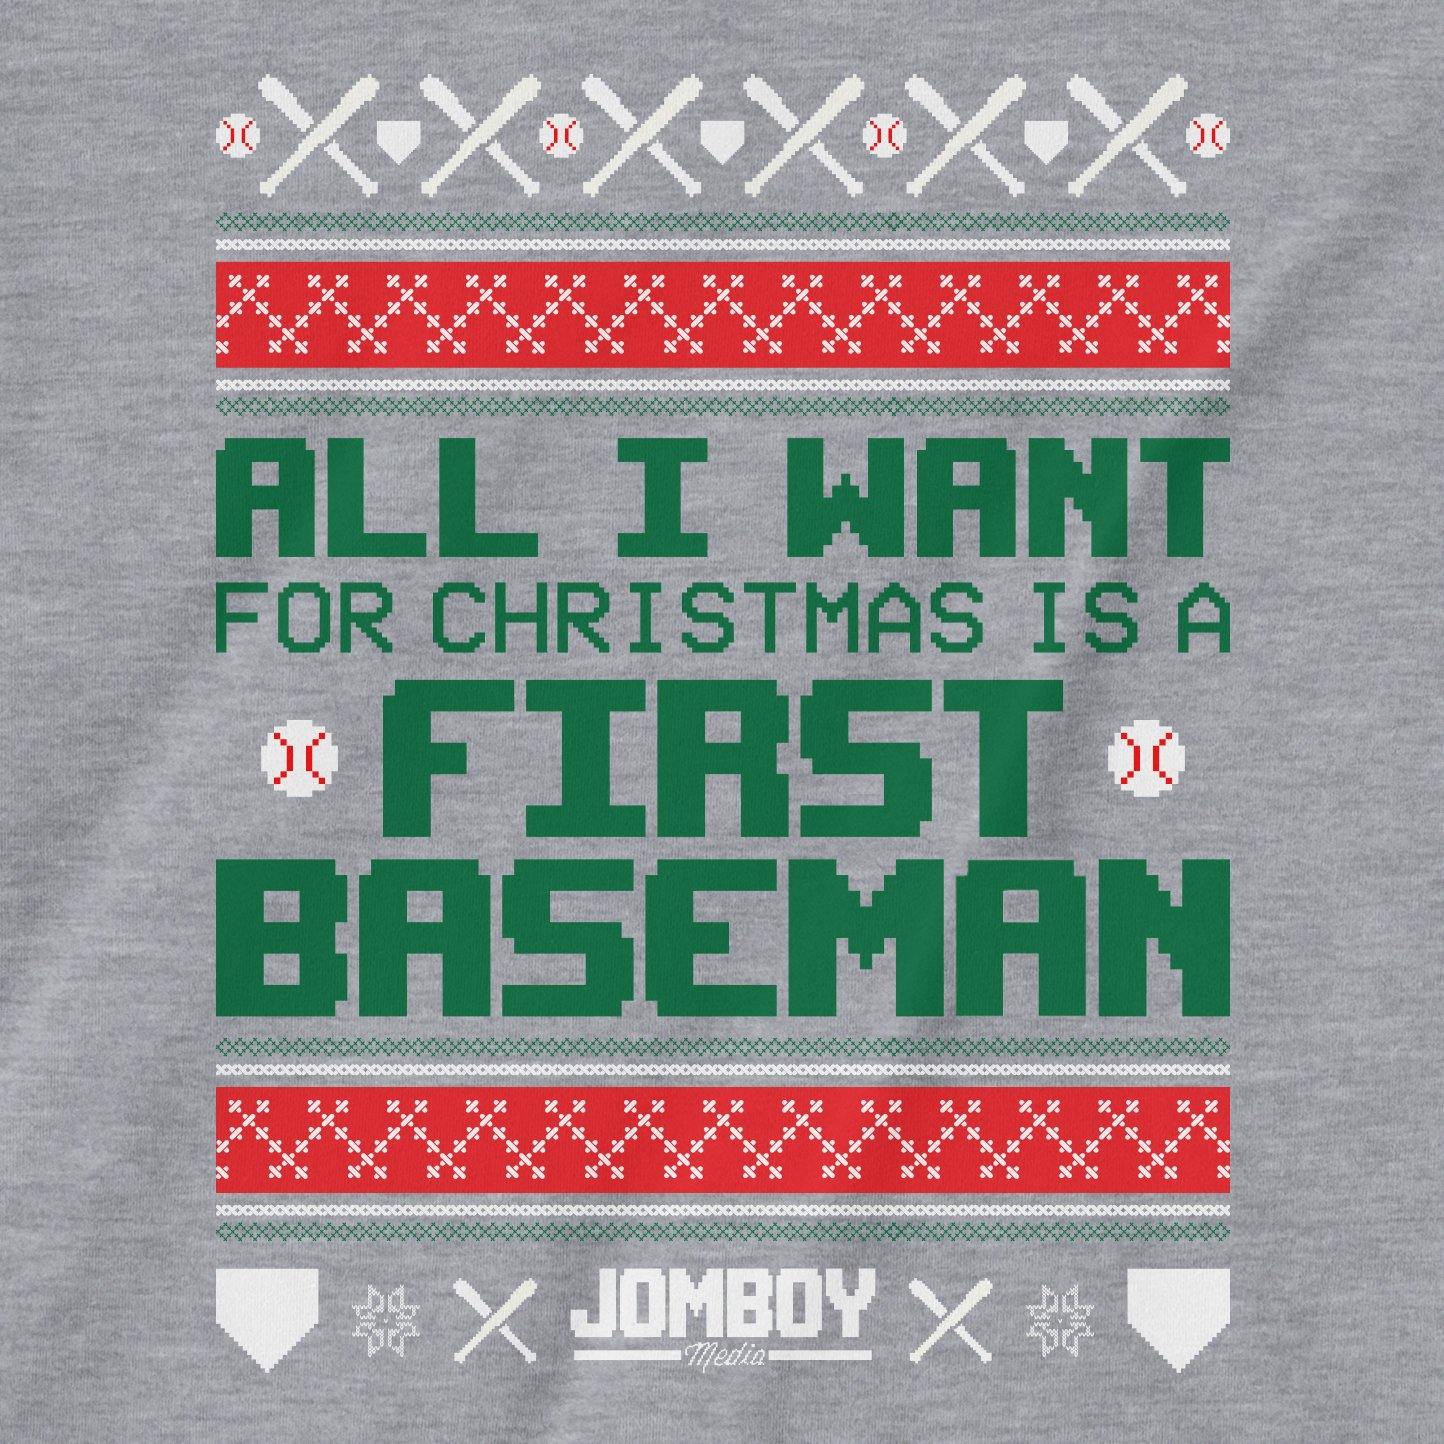 All I Want For Christmas Is A First Baseman | T-Shirt - Jomboy Media